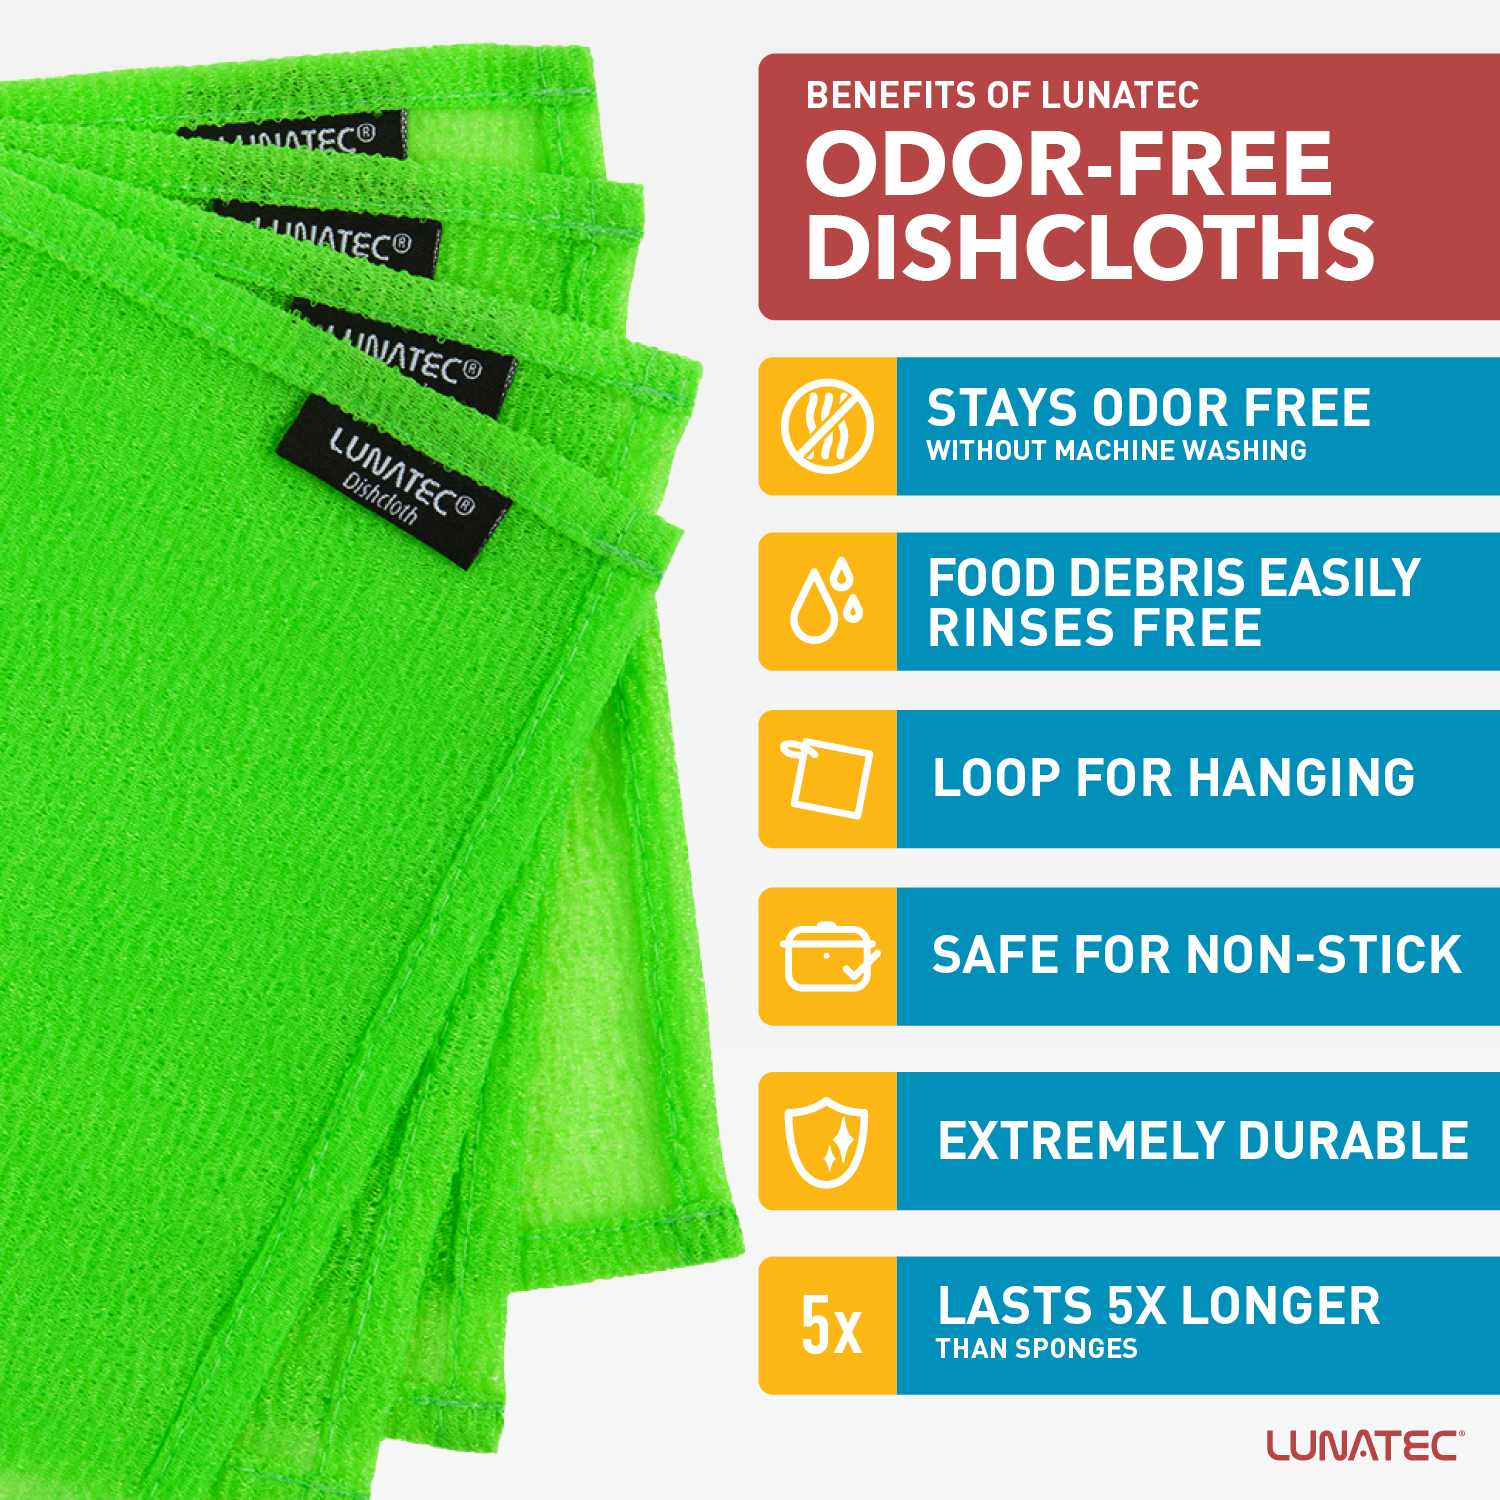 https://lunatecgear.com/wp-content/uploads/Odor-Free-Dishcloth_Infographic_0623_benefits-green.jpg